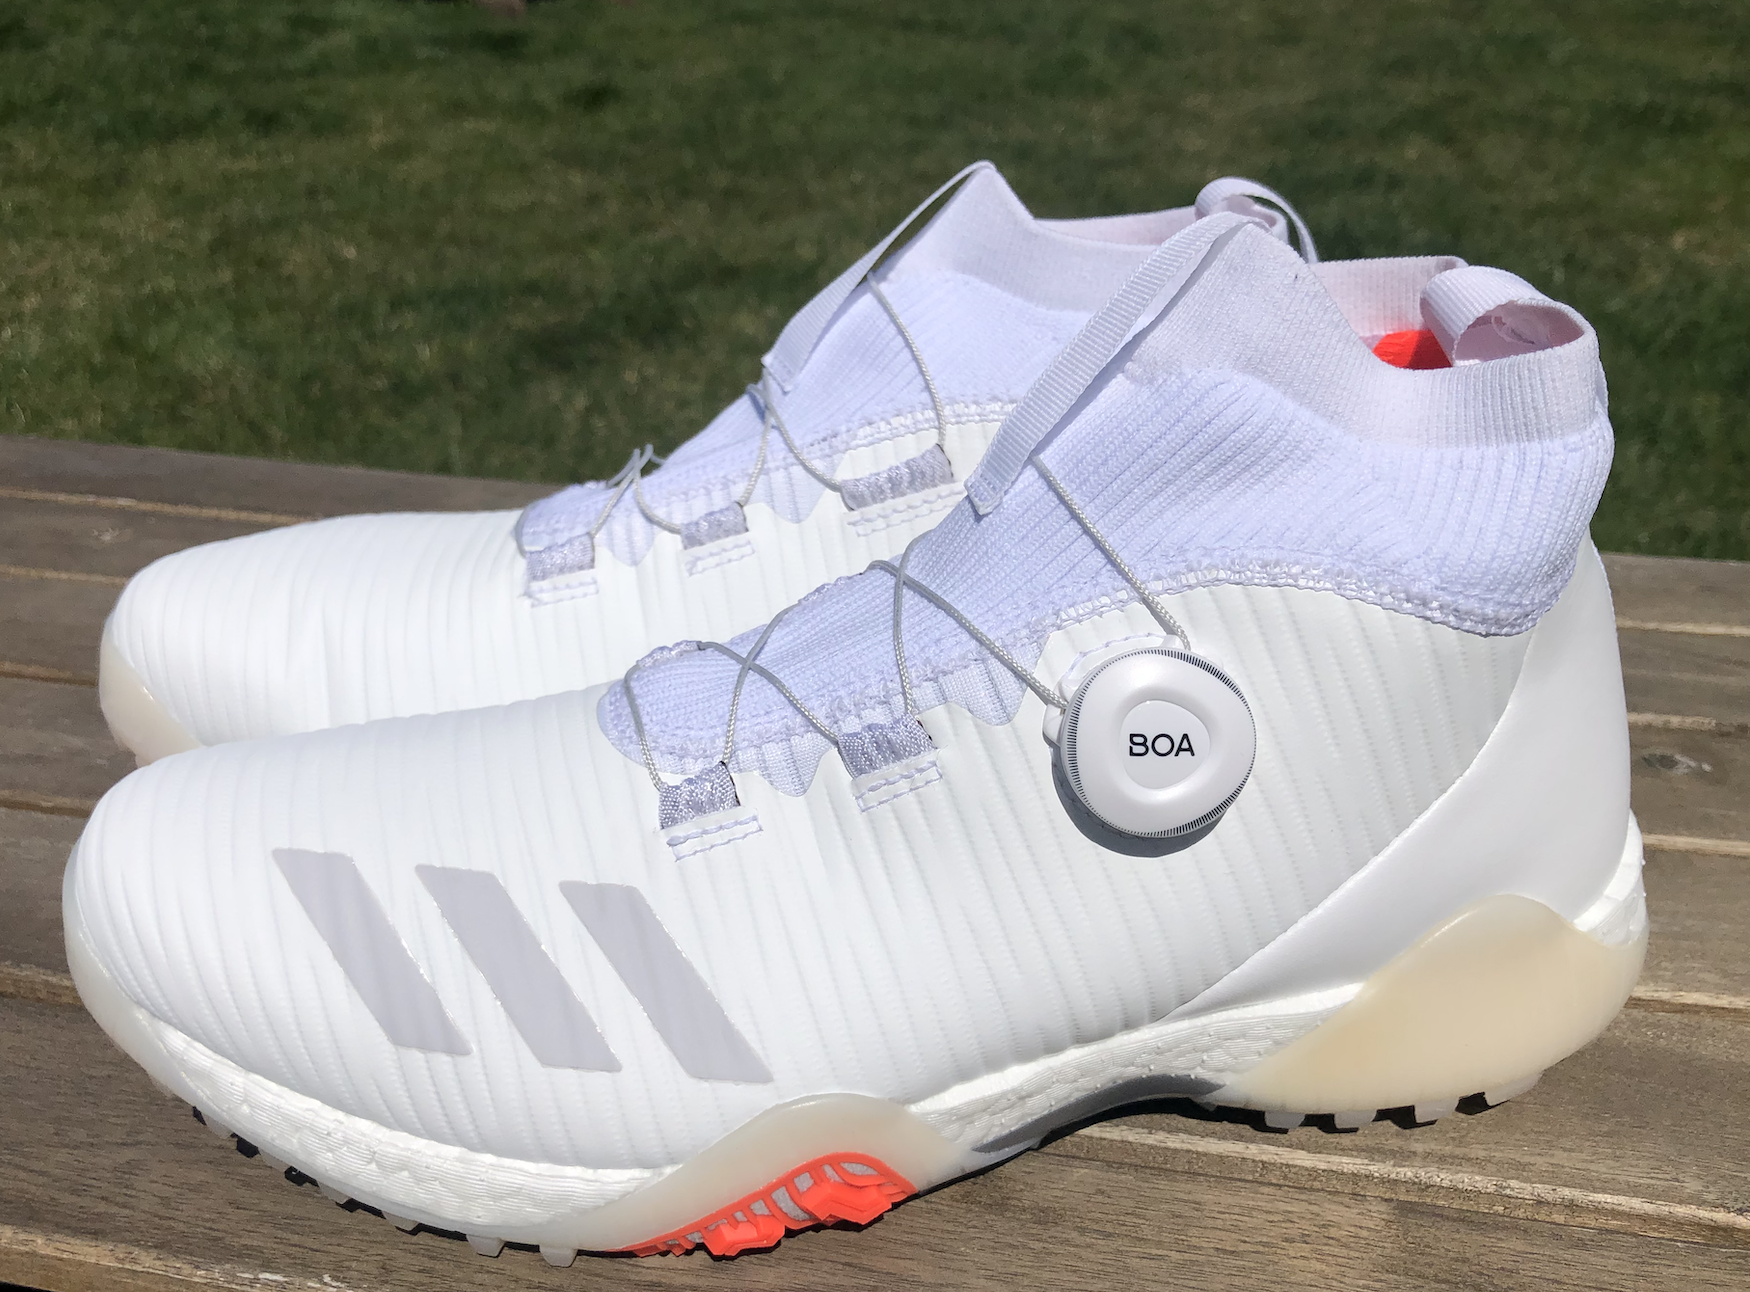 GolfWRX Spotlight: Adidas CodeChaos 